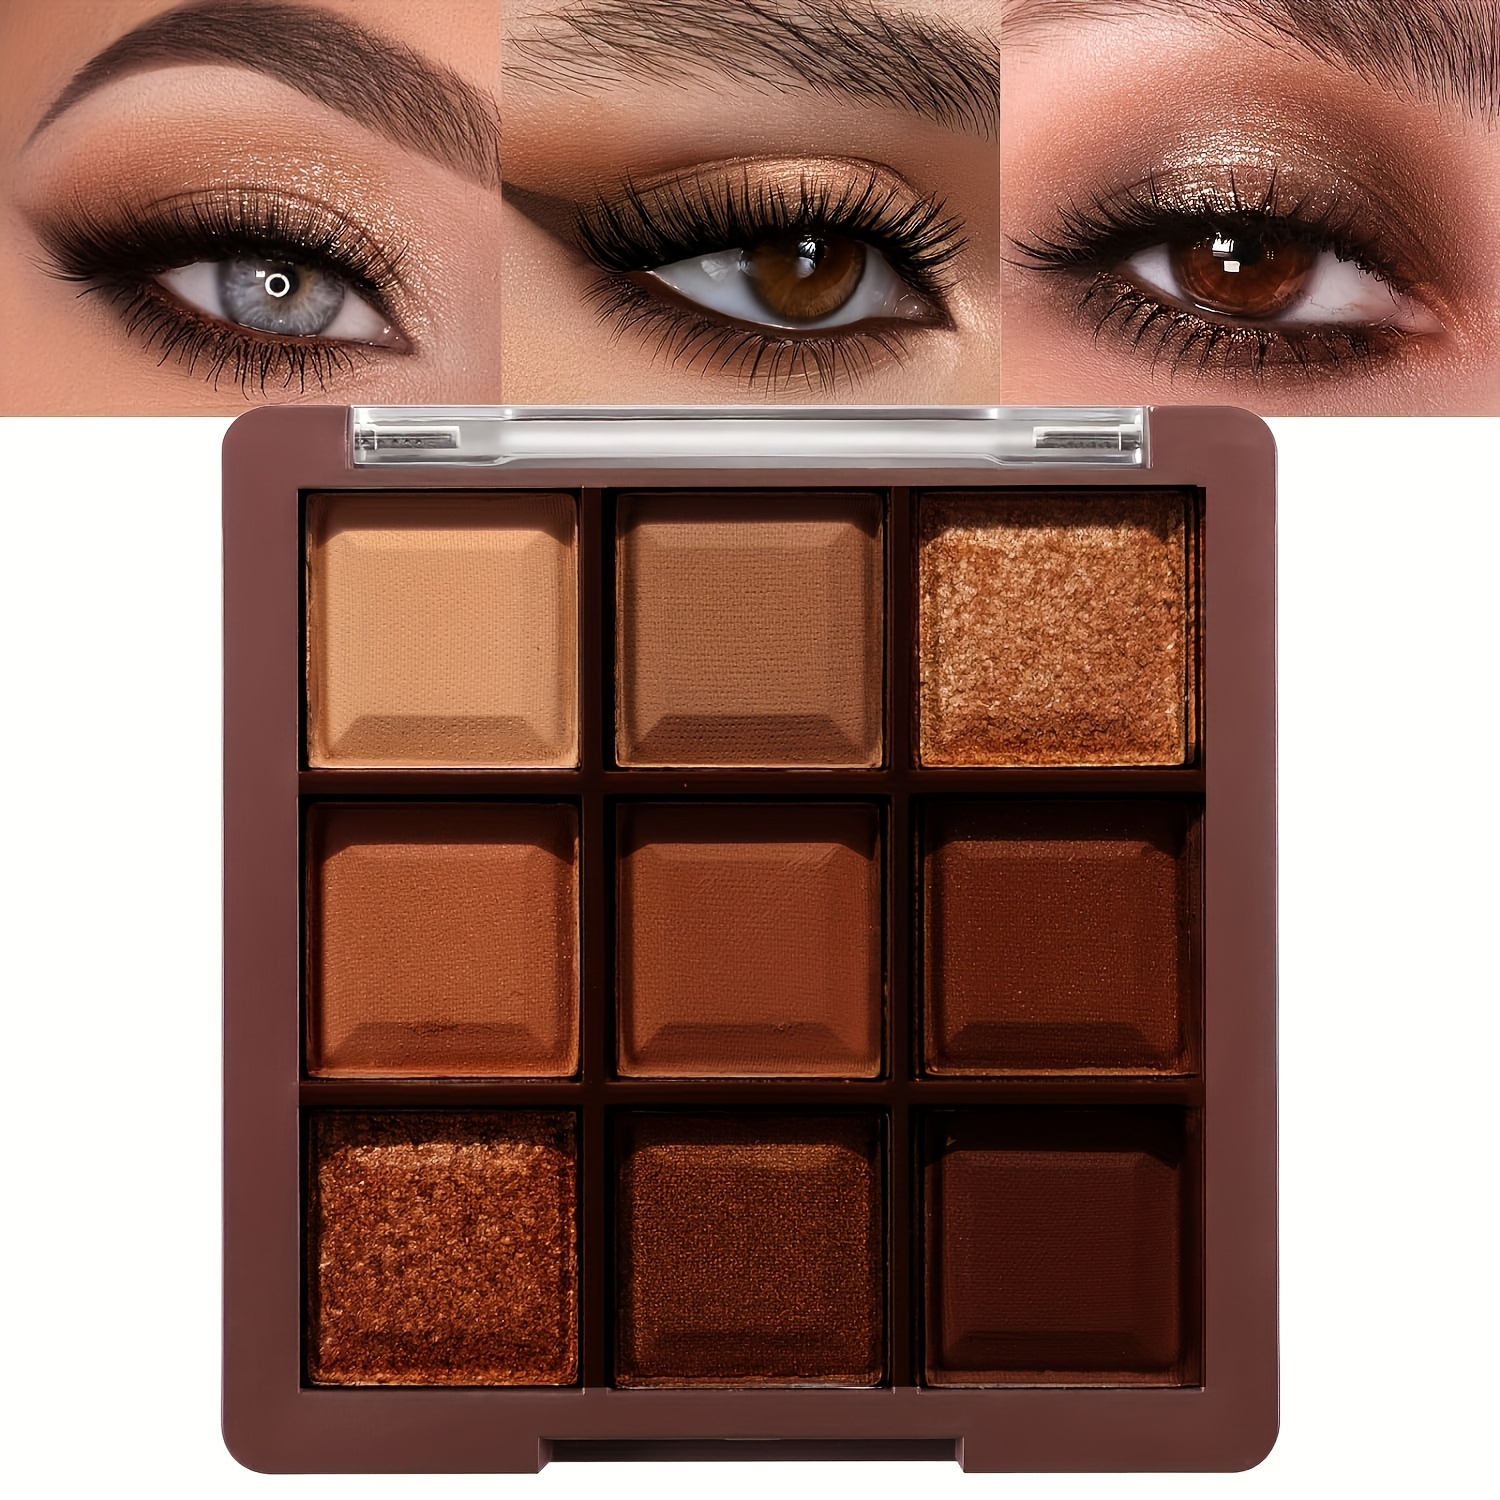 

9 Colors Eyeshadow Palette, Matte Shimmer Glitter Eye Shadow Makeup Palette, Highly Pigmented Long Lasting Waterproof, Natural Neutral Nude Eyeshadow Makeup Pallet, Chocolate Brown